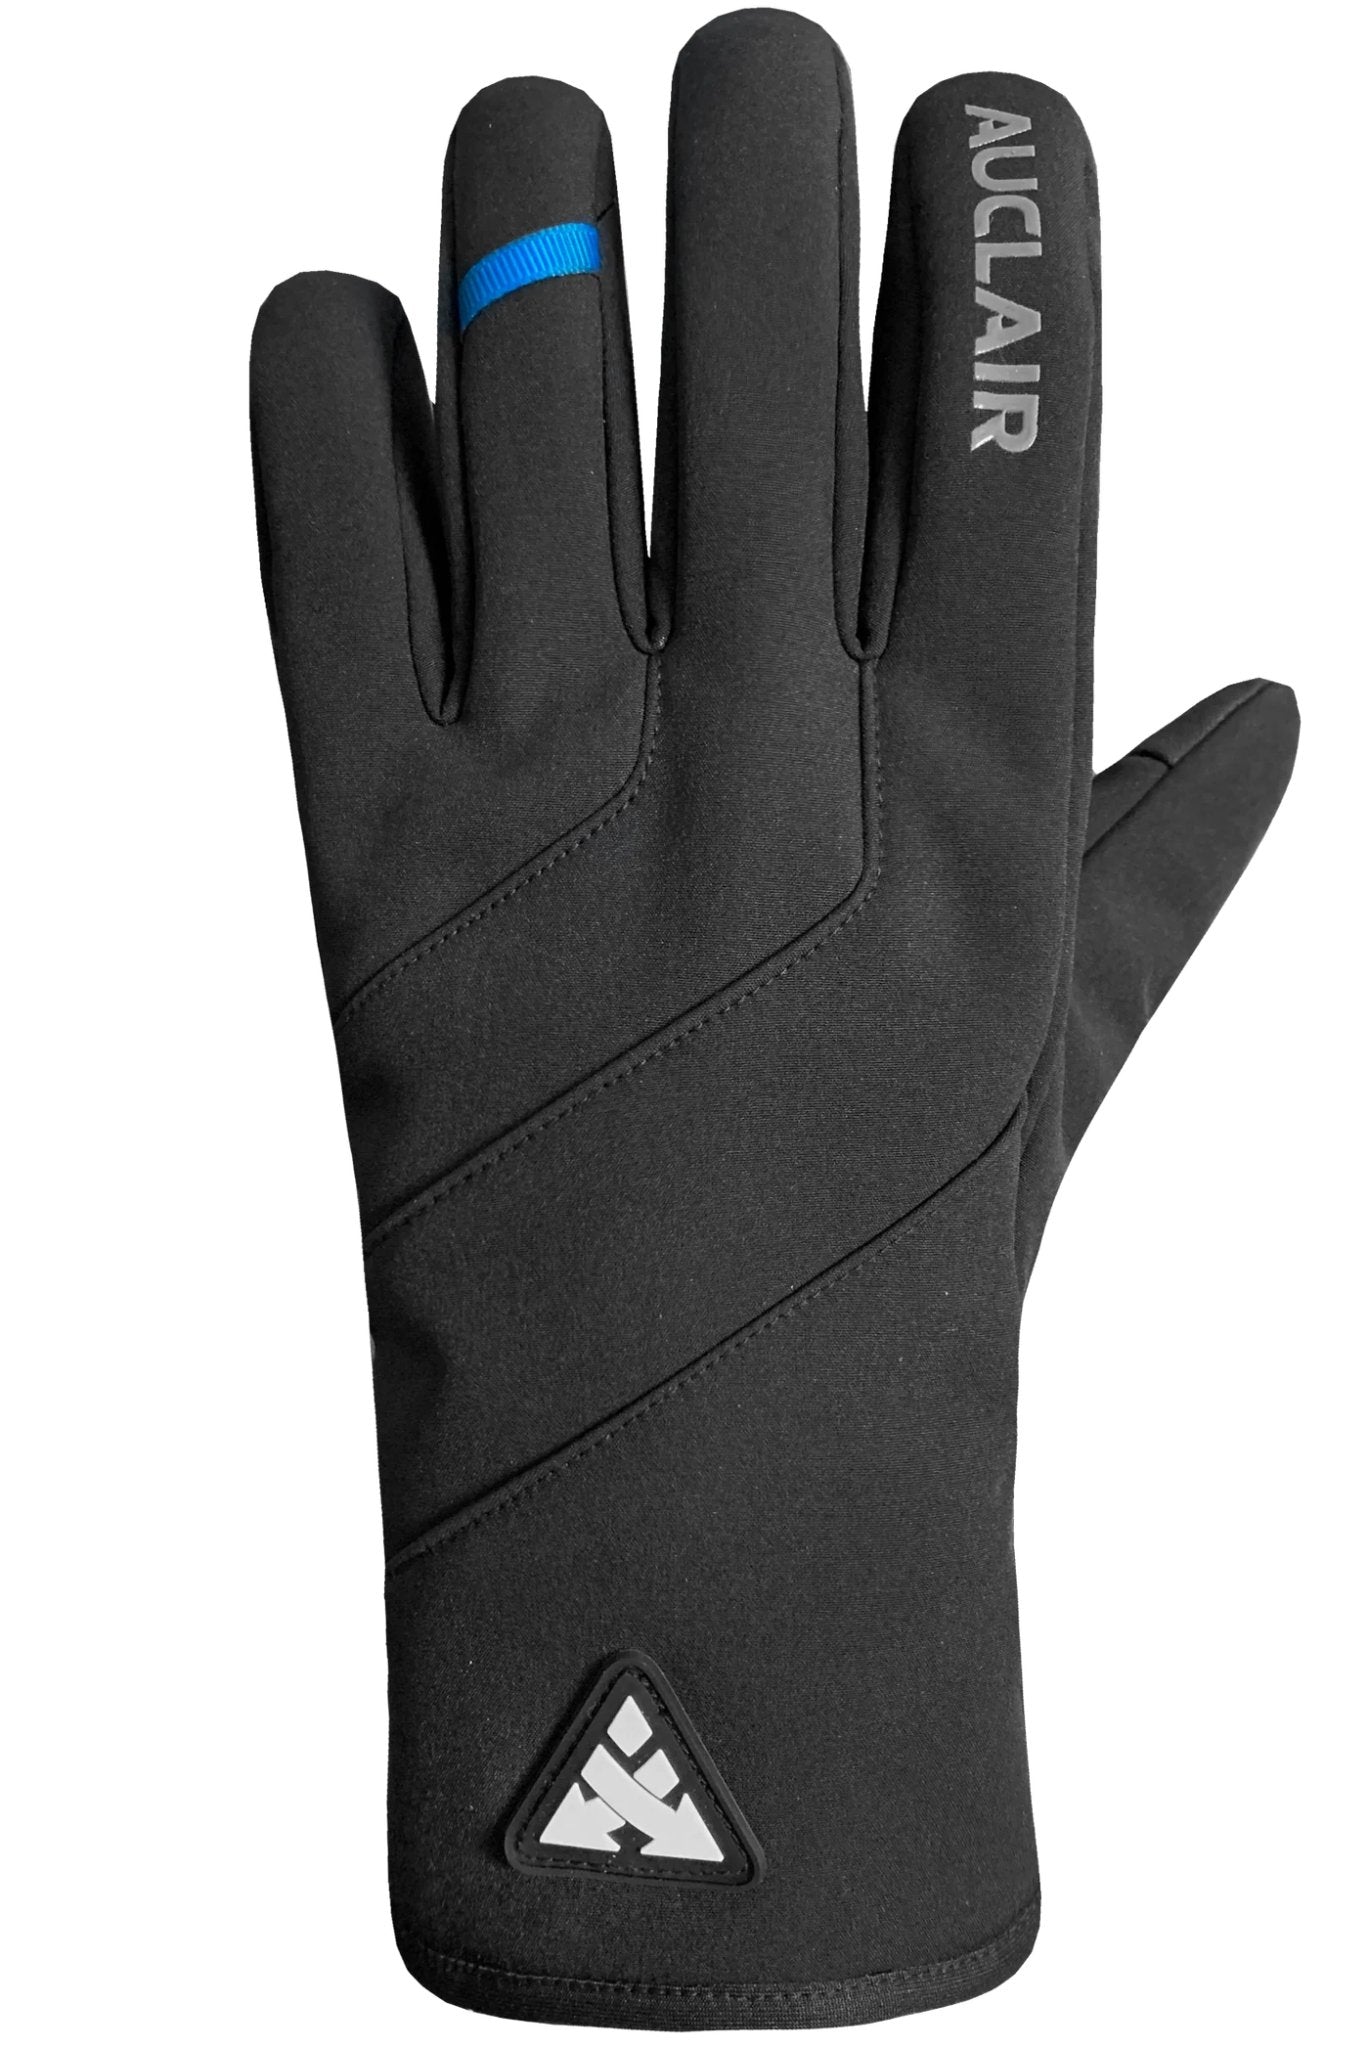 Auclair Deltapeak Gloves Black - FULLSEND SKI AND OUTDOOR